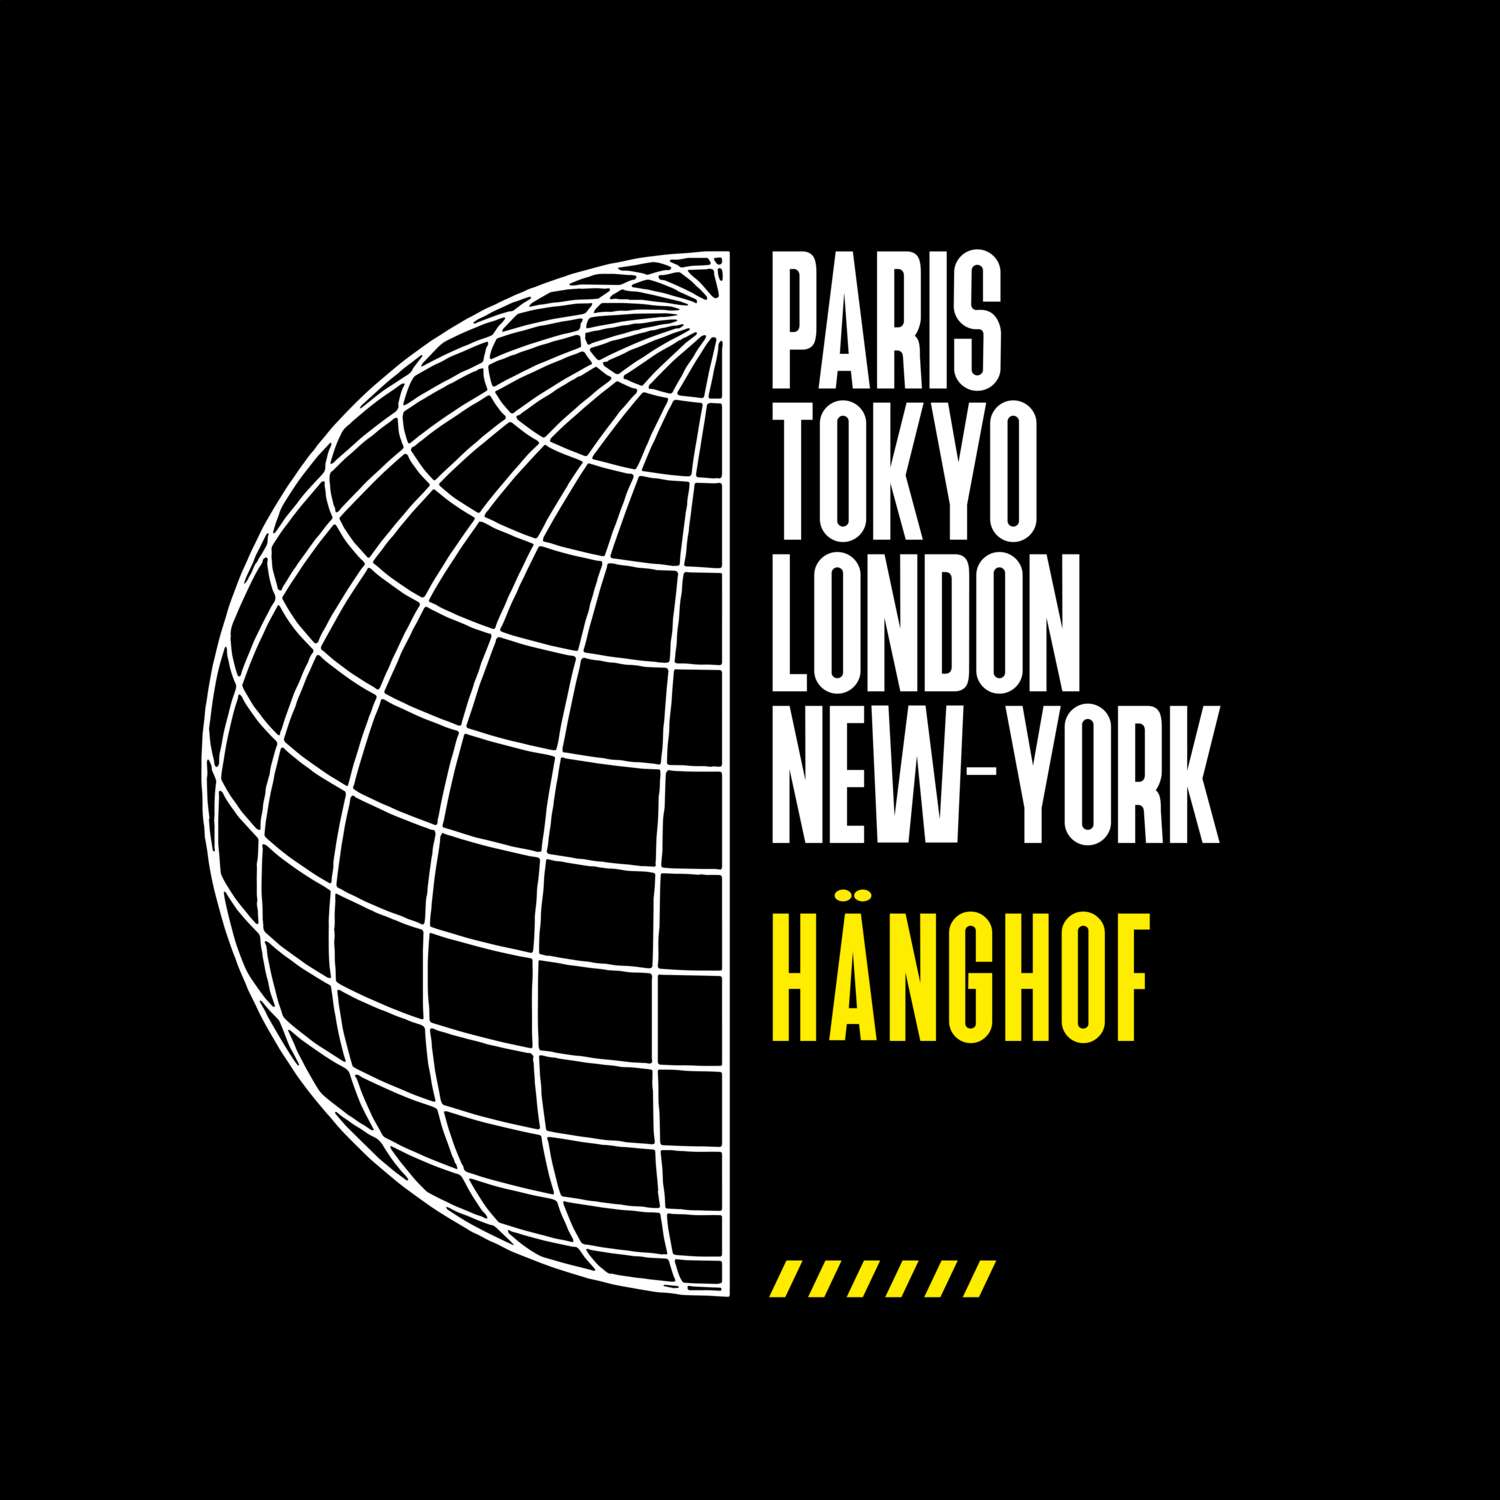 Hänghof T-Shirt »Paris Tokyo London«